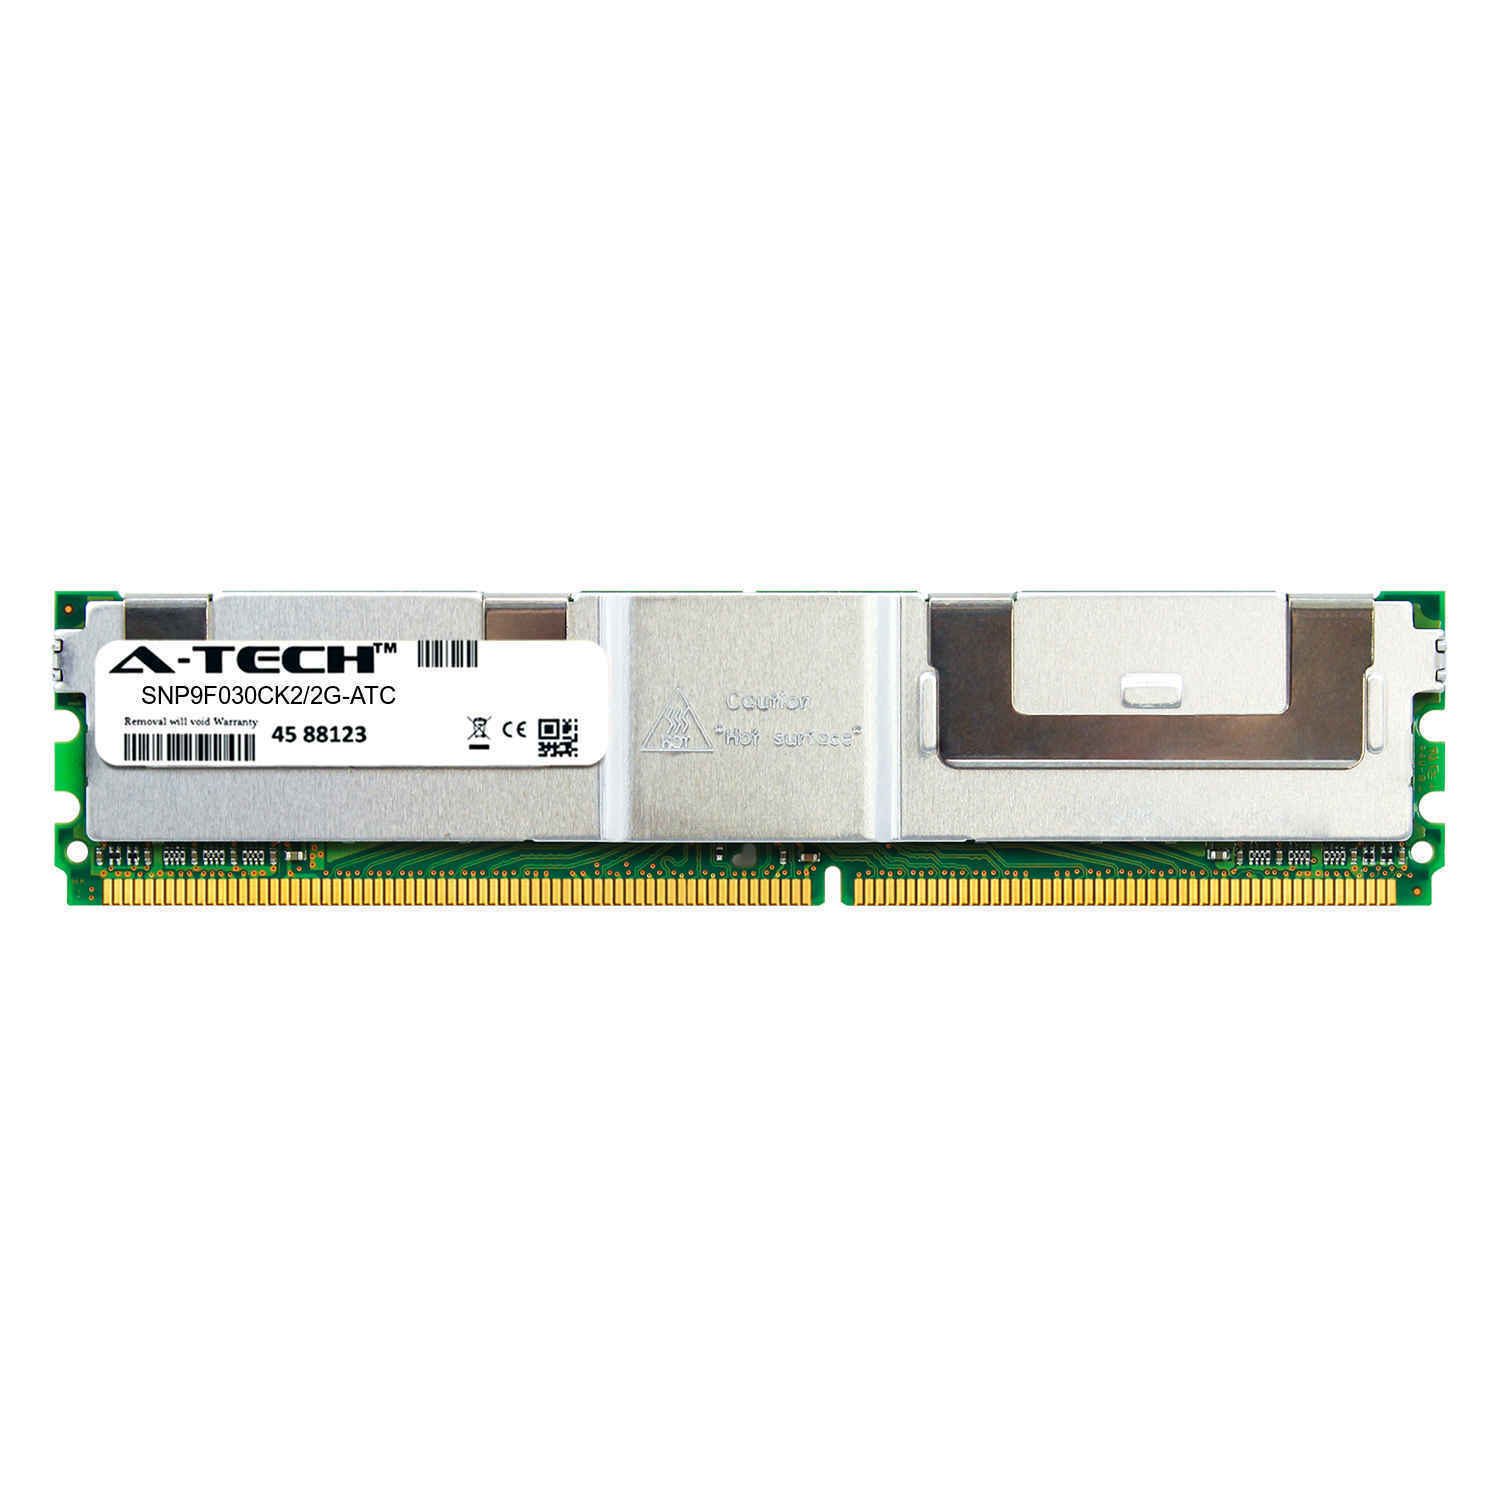 1GB DDR2 PC2-5300F ECC FBDIMM (Dell SNP9F030CK2/2G Equivalent) Server Memory RAM